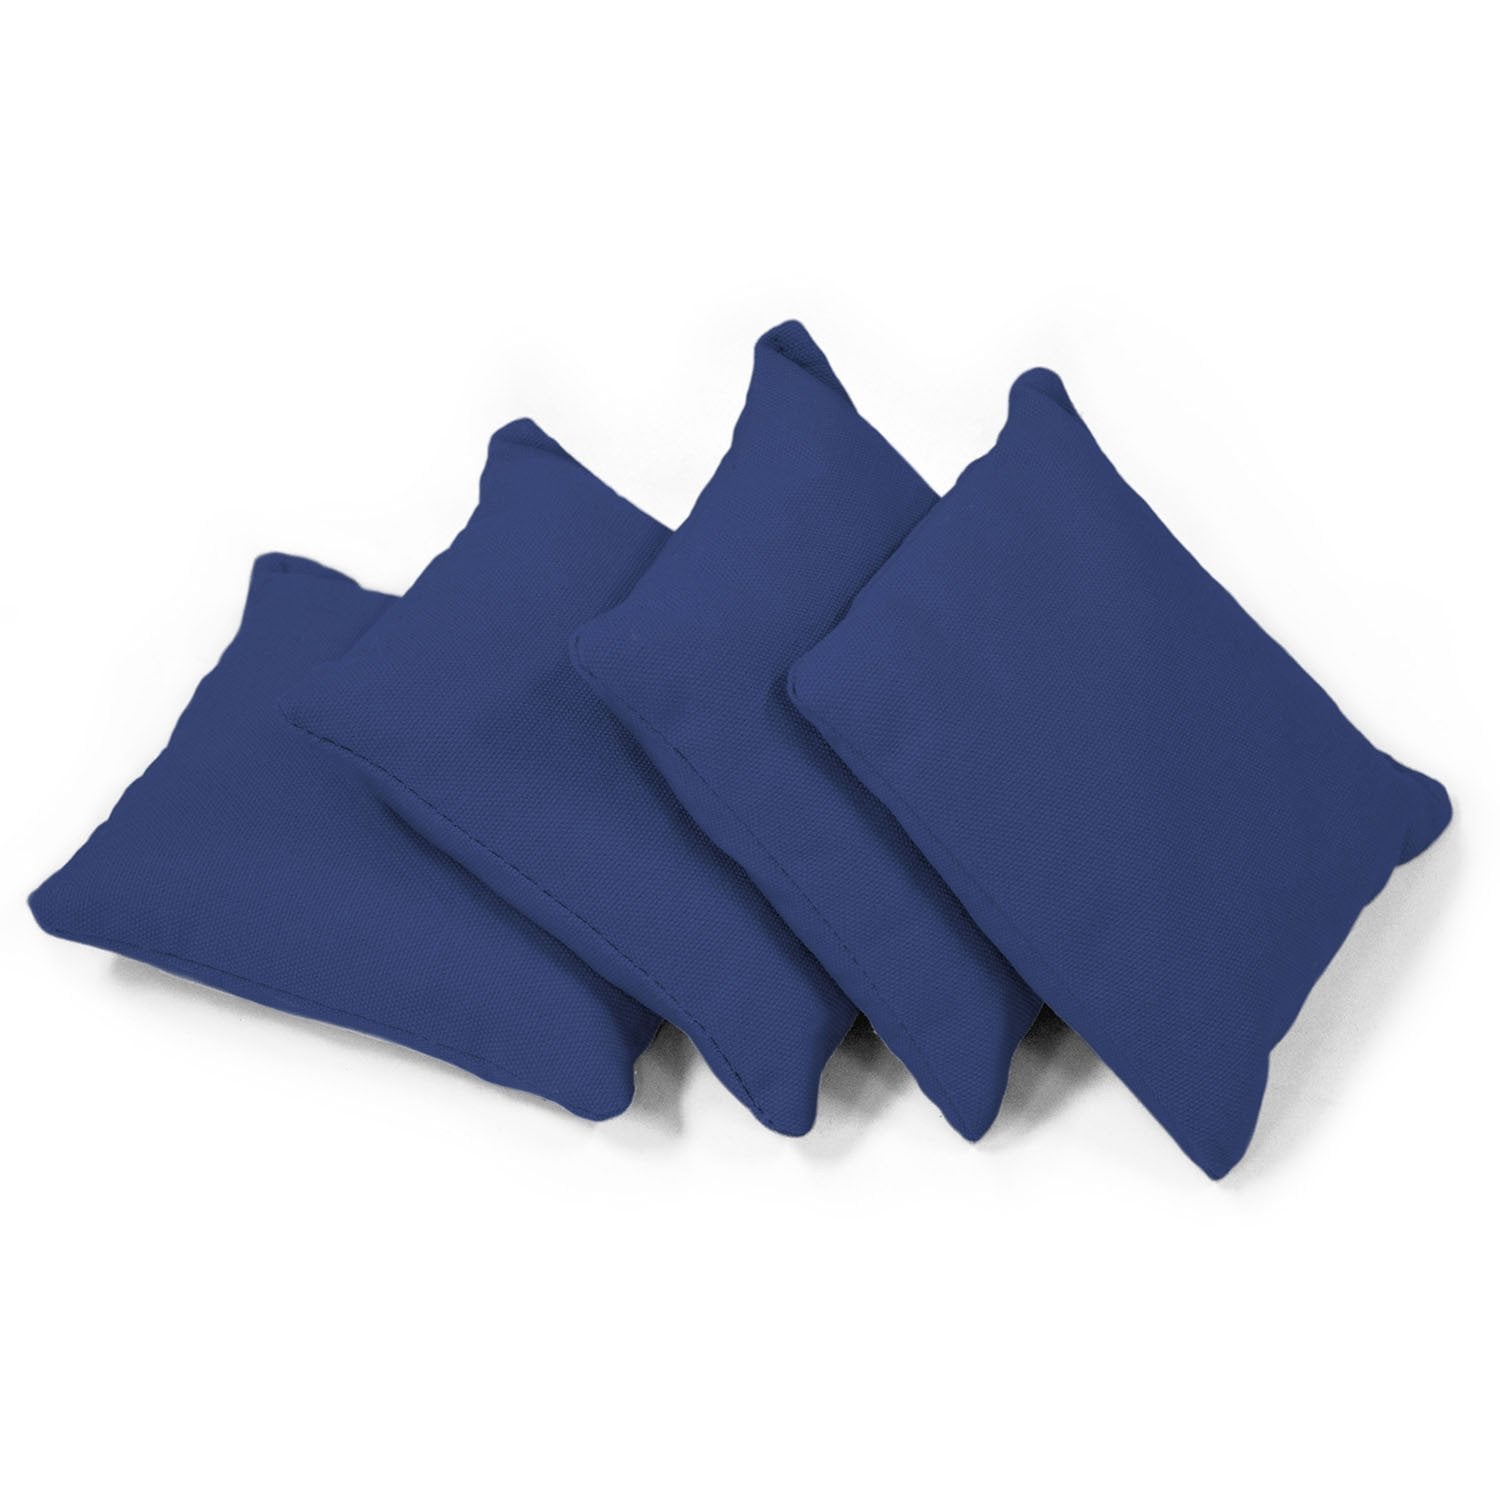 Set of 4 blue Slick Woody's cornhole bags